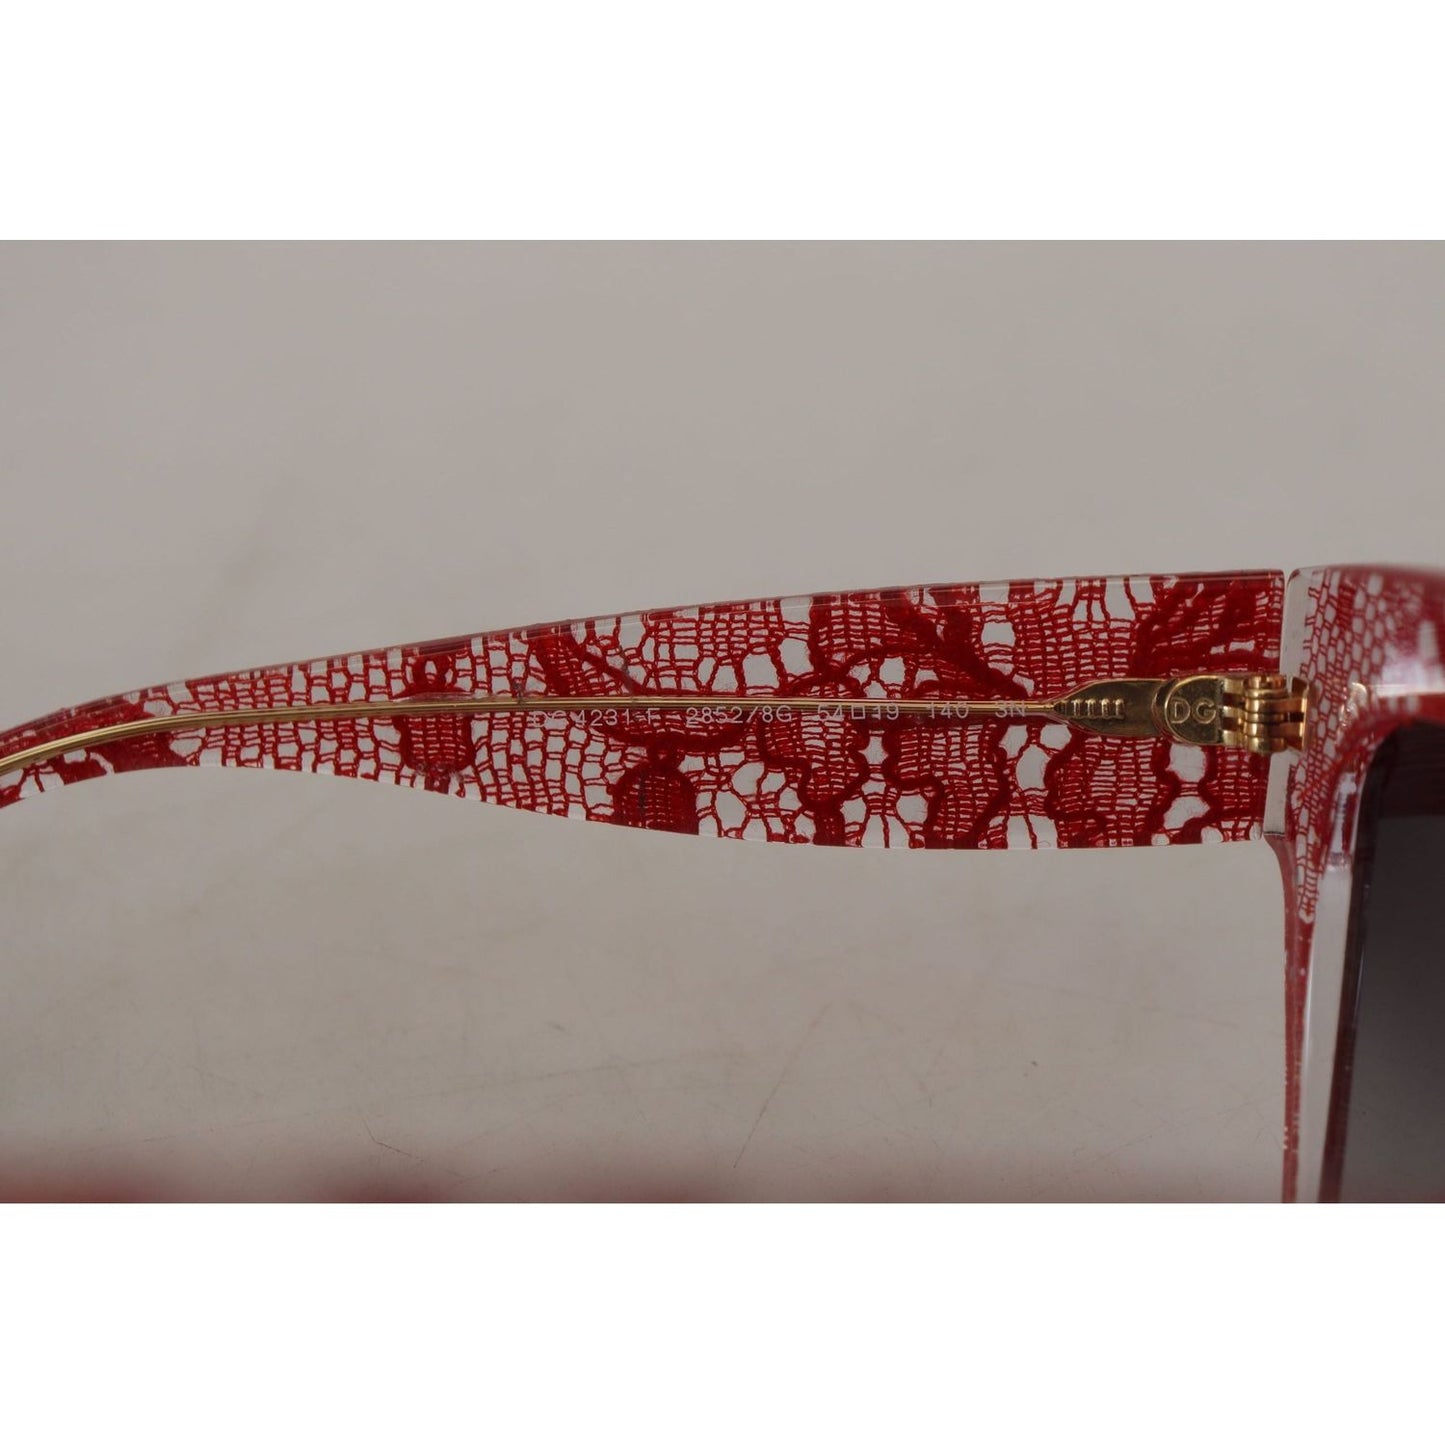 Dolce & Gabbana | Red Lace Acetate Rectangle Shades  DG4231F  Sunglasses  | McRichard Designer Brands